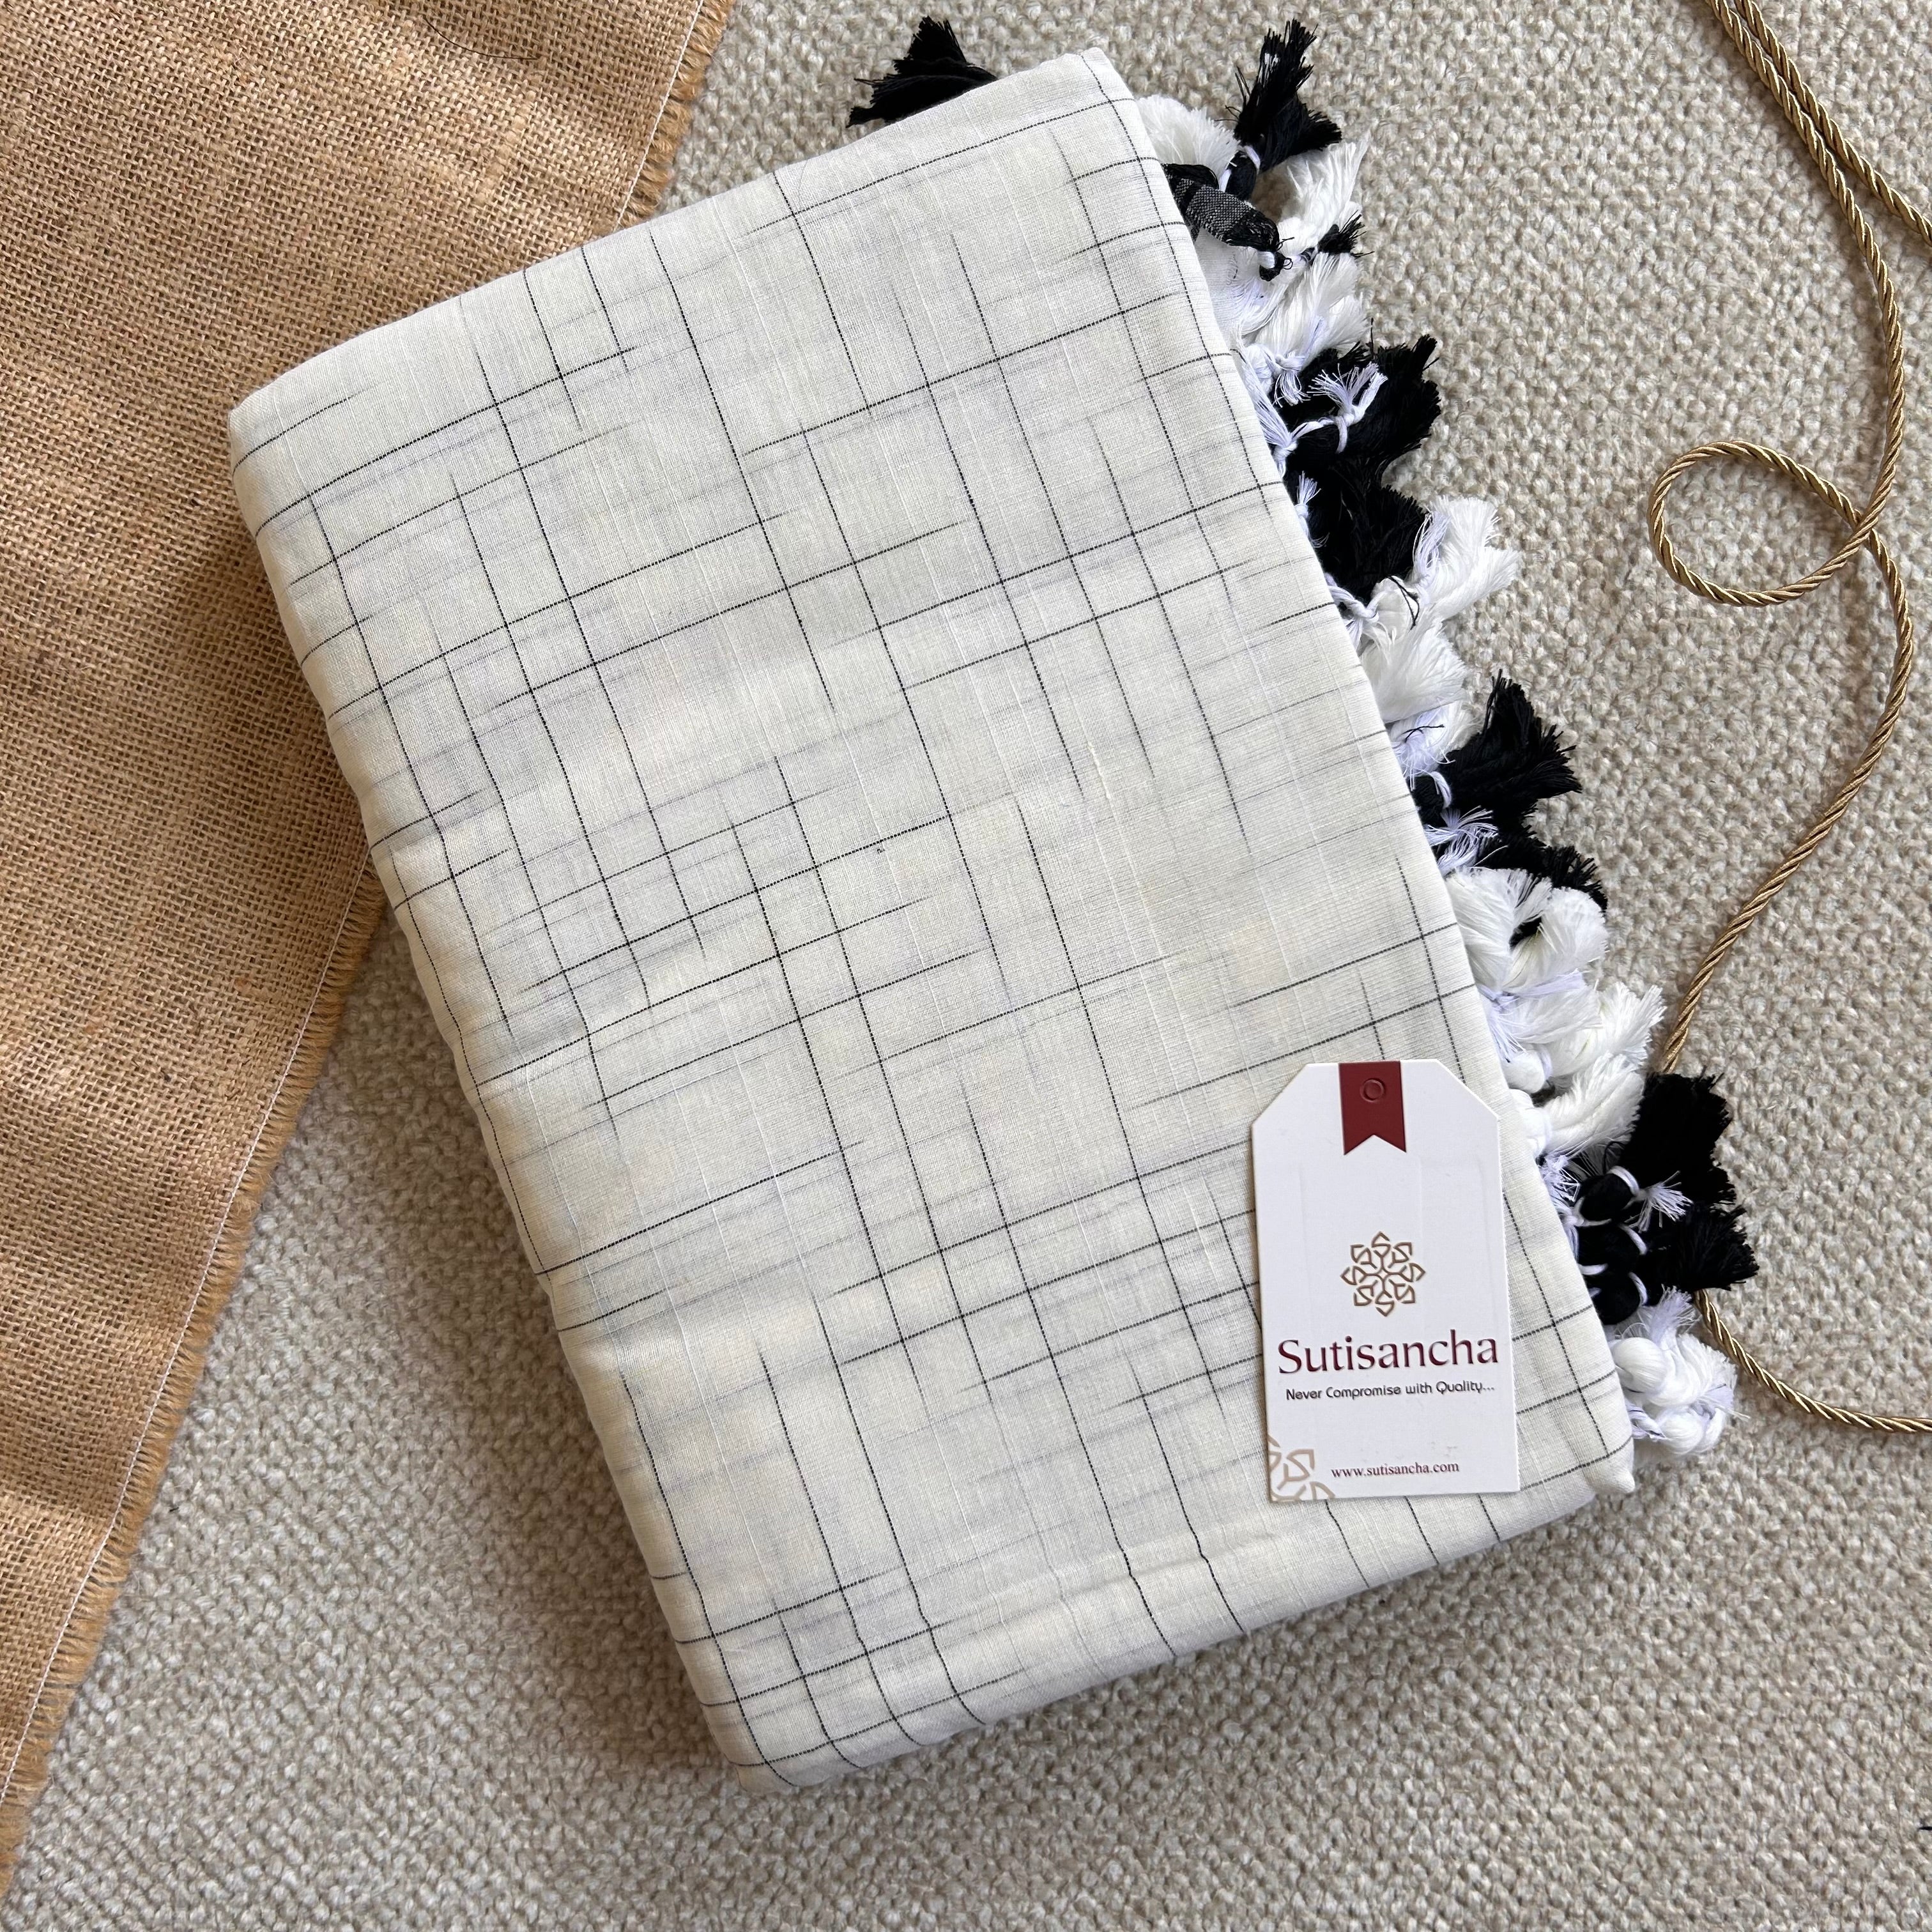 Sutisancha Offwhite Handloom Cotton Saree with Trendy Kotki Checks Design